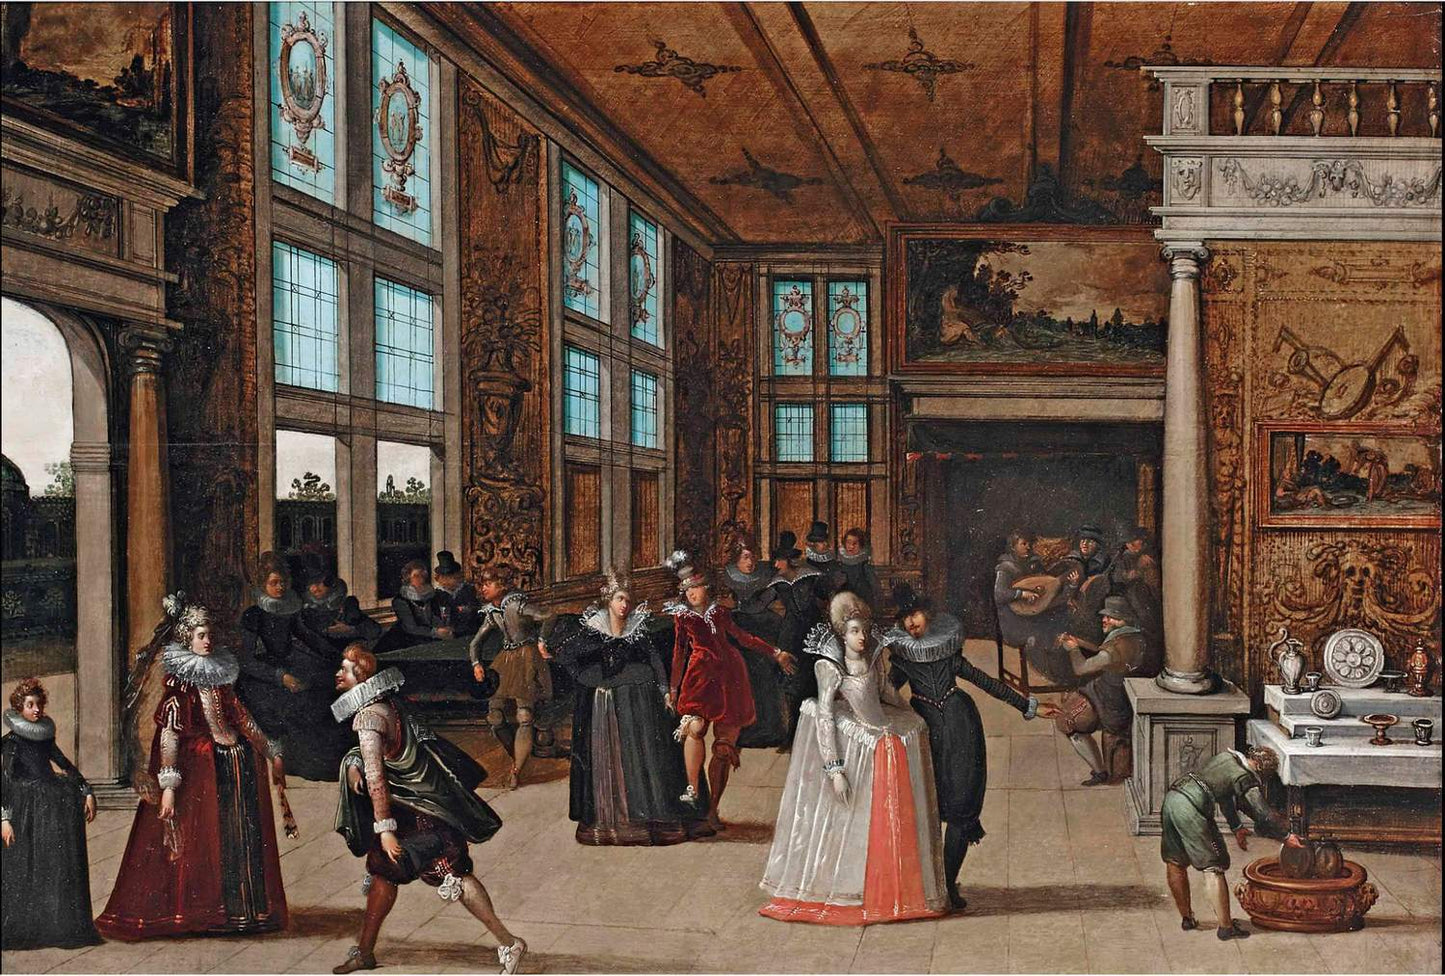 Palace interior, couples courting at ball, Louis de Caullery